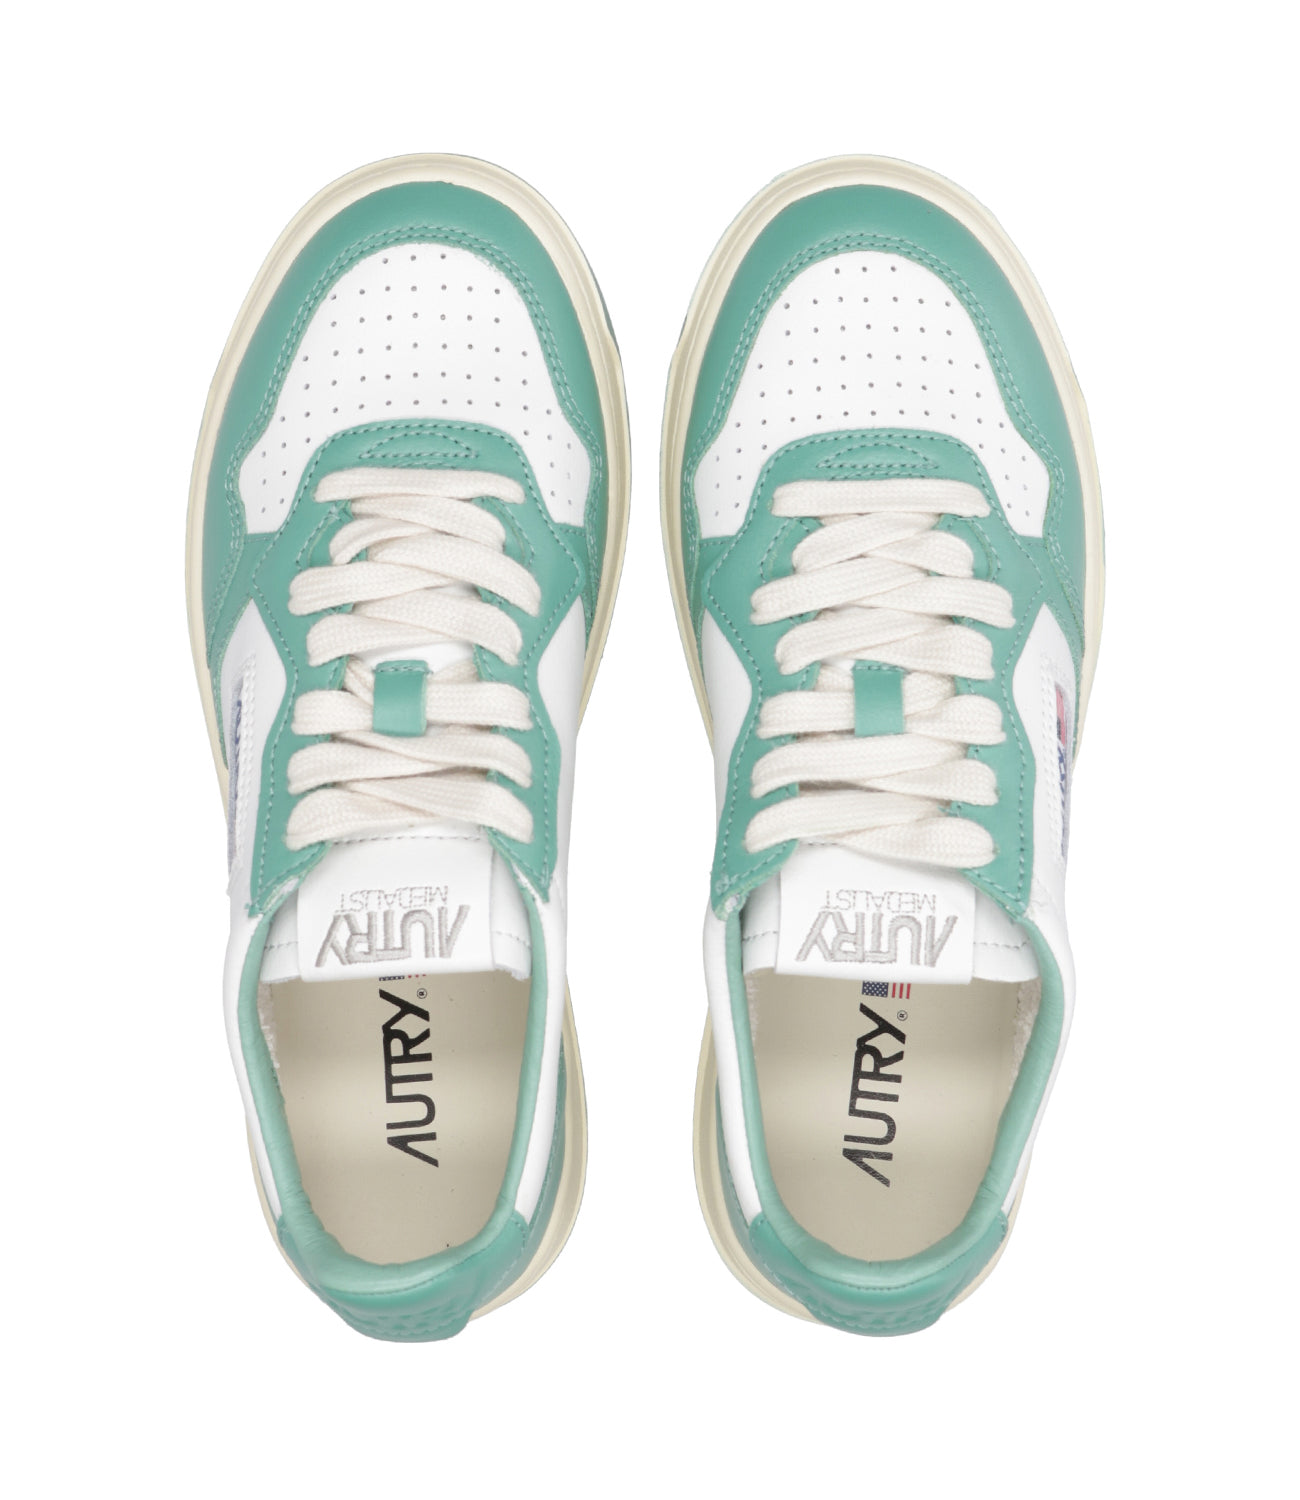 Autry | Sneakers Medalist Low Bianco e Verde acqua